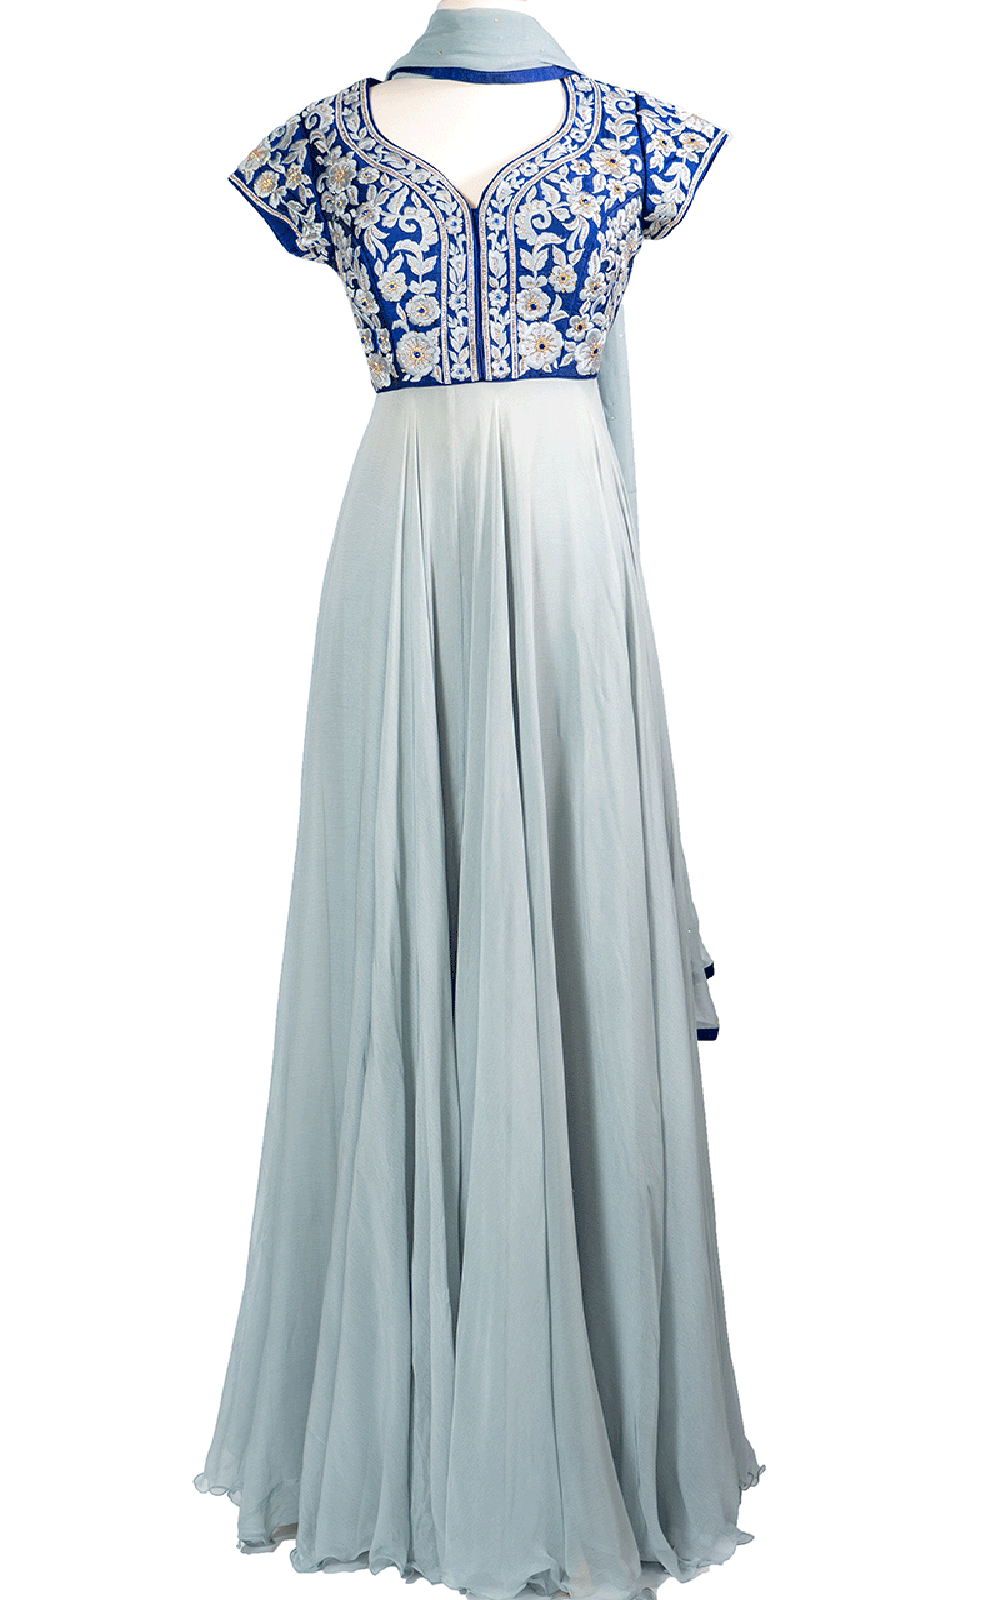 Blue Top Anarkali with Grey Floral Threadwork